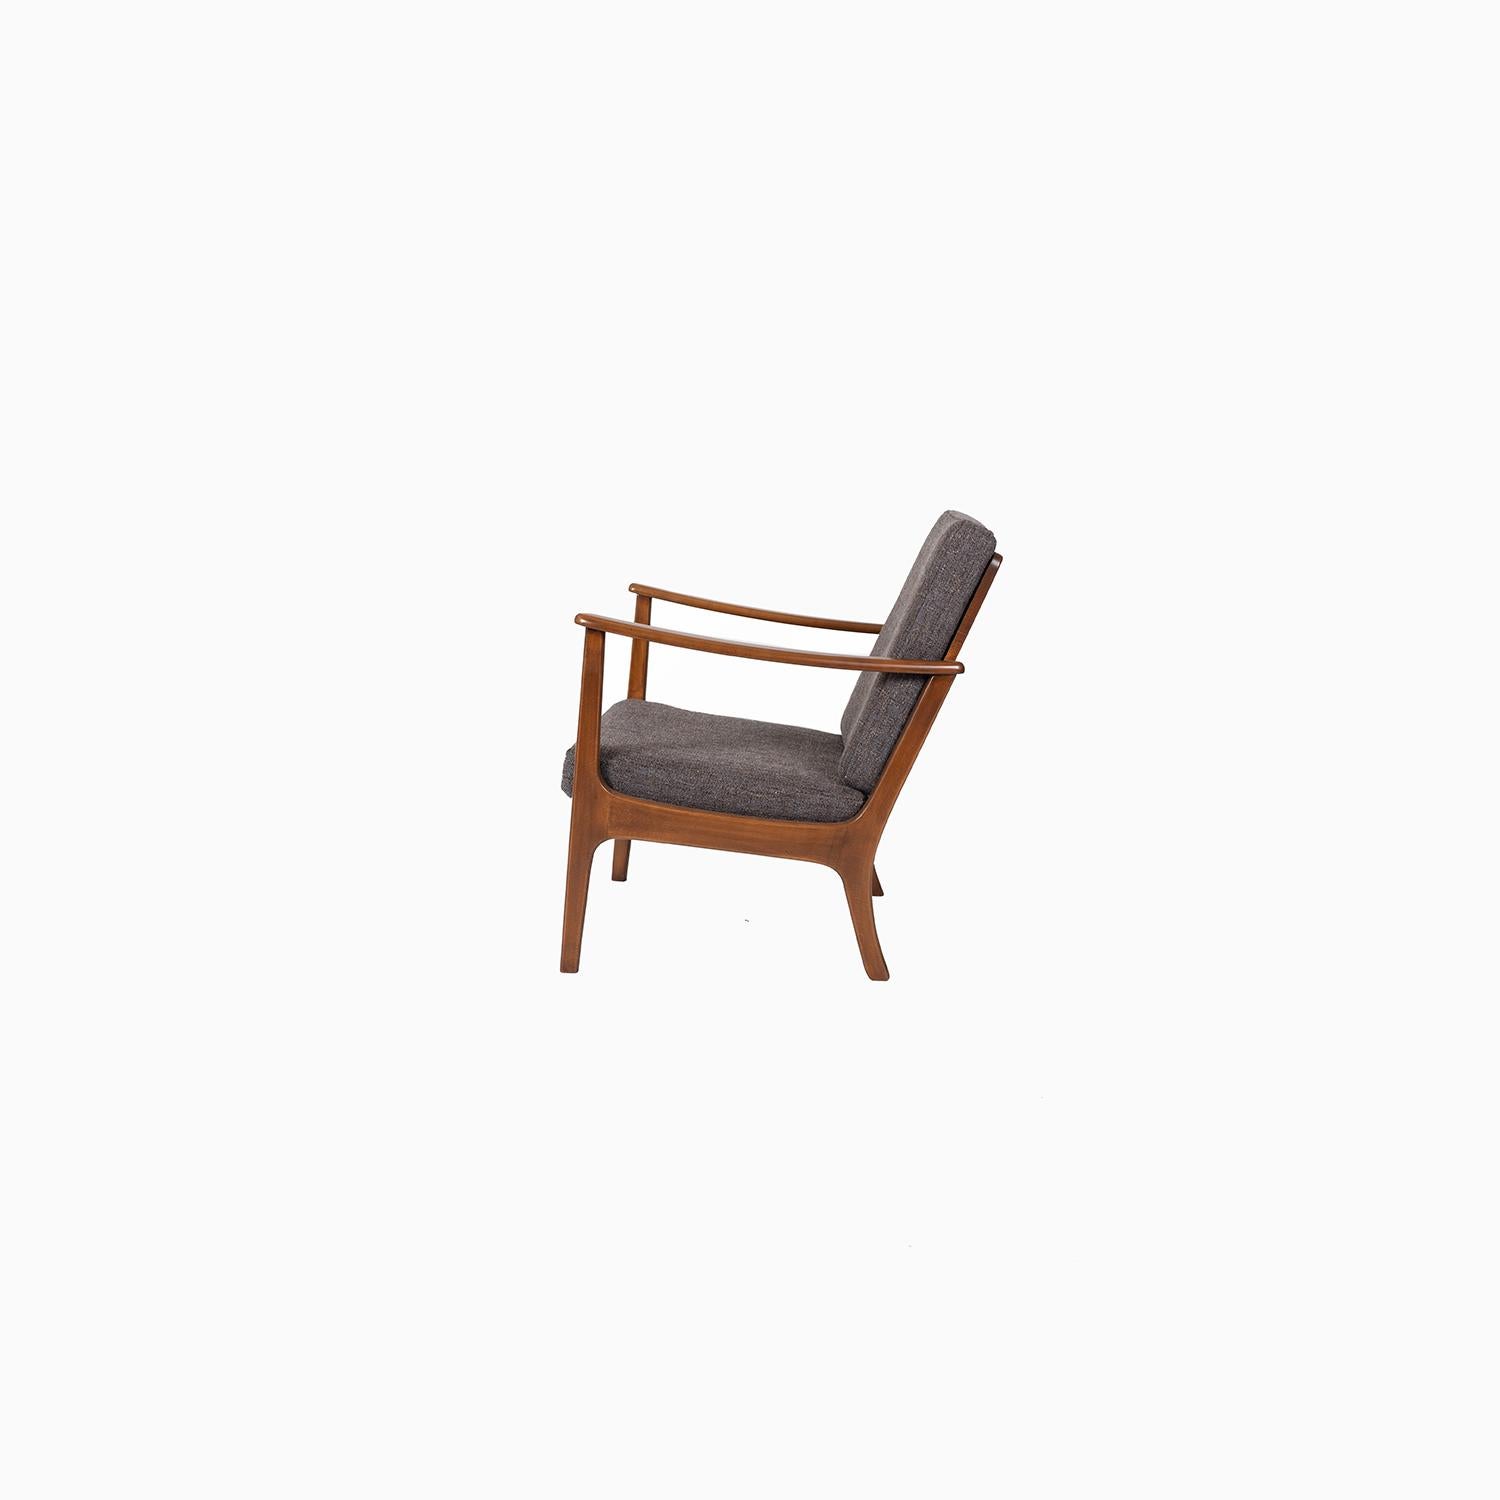 20th Century Danish Modern Beech Framed Lounge Chair